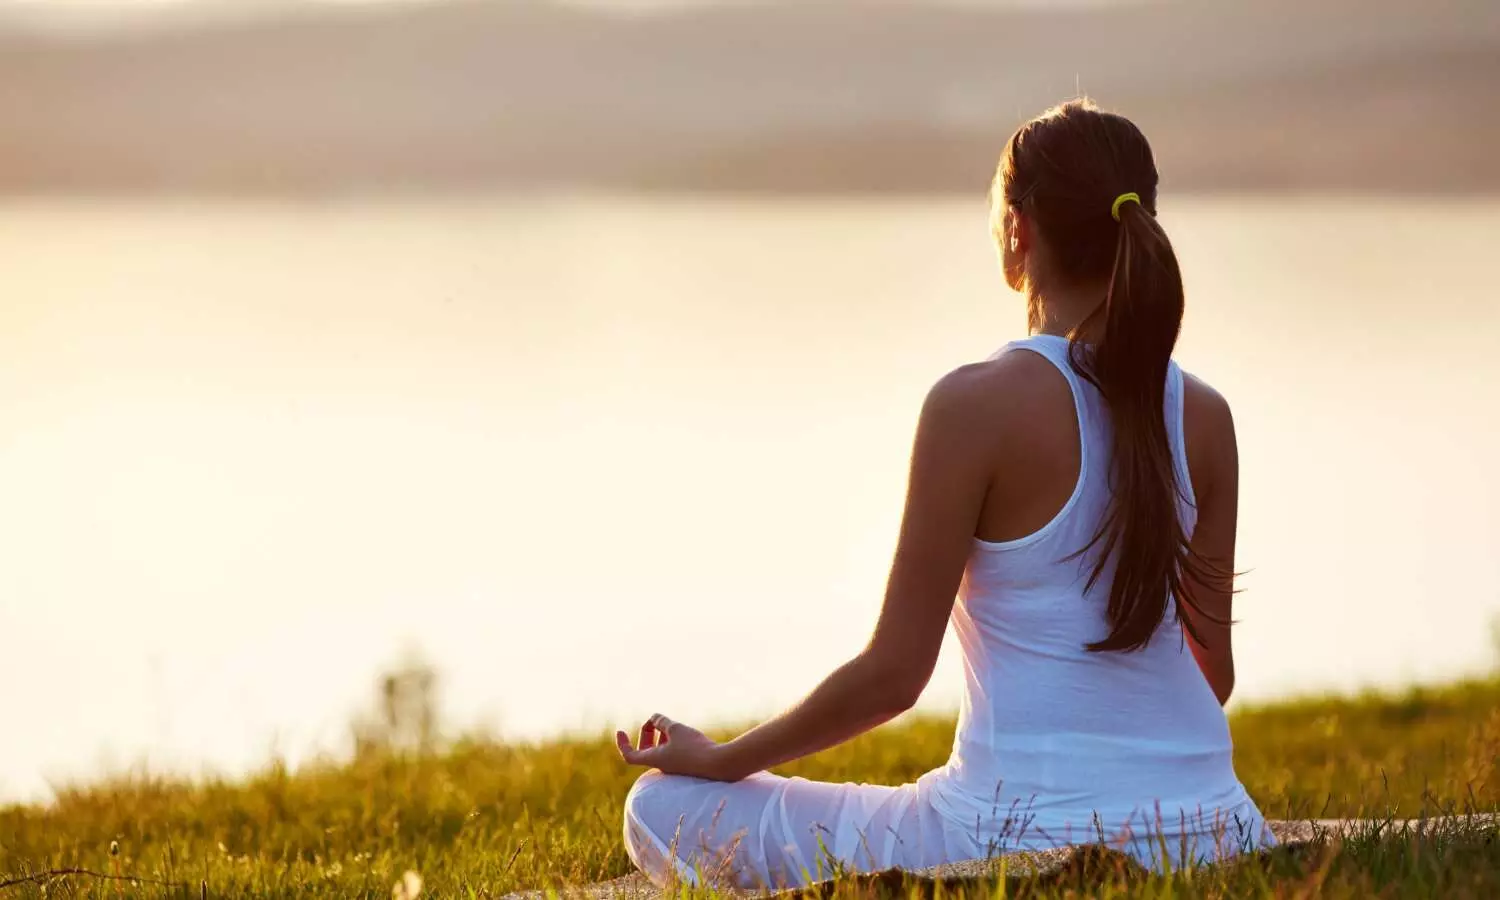 Transcendental meditation reduces burnout and depression in physicians: Study